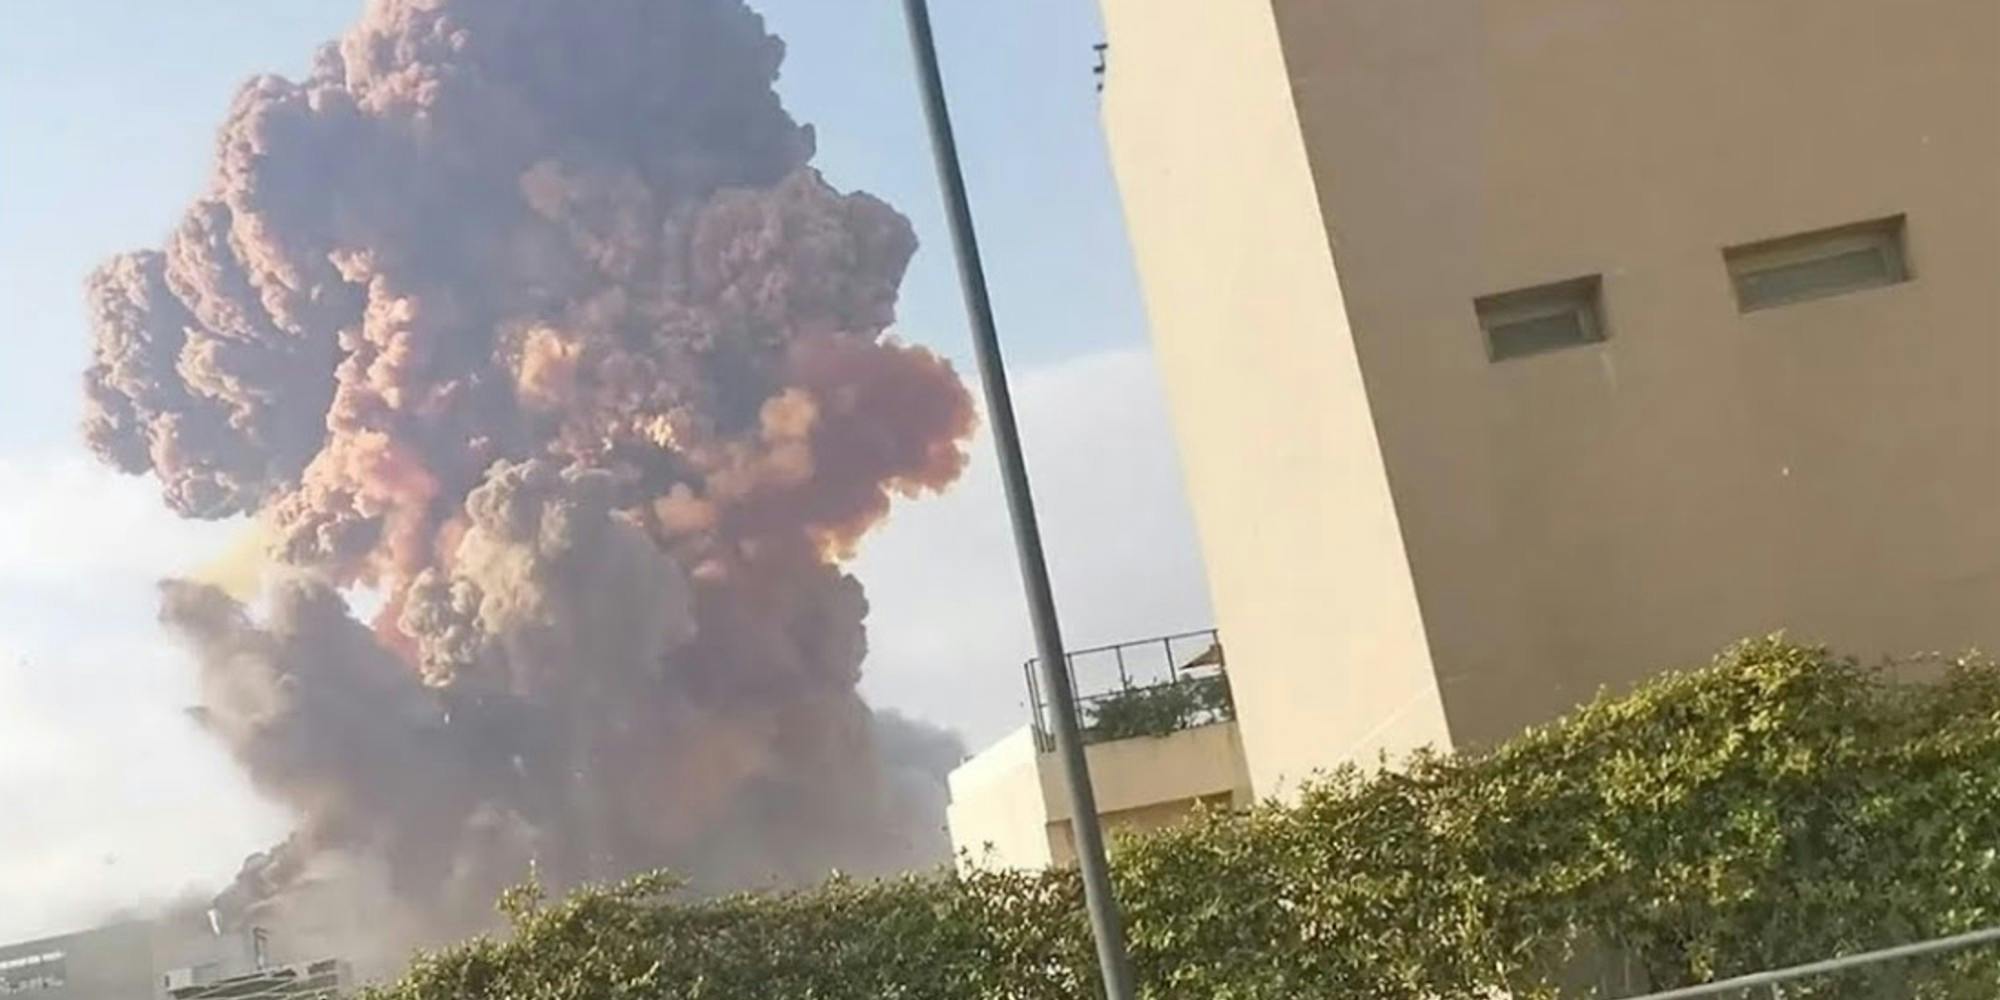 An explosion in Lebanon